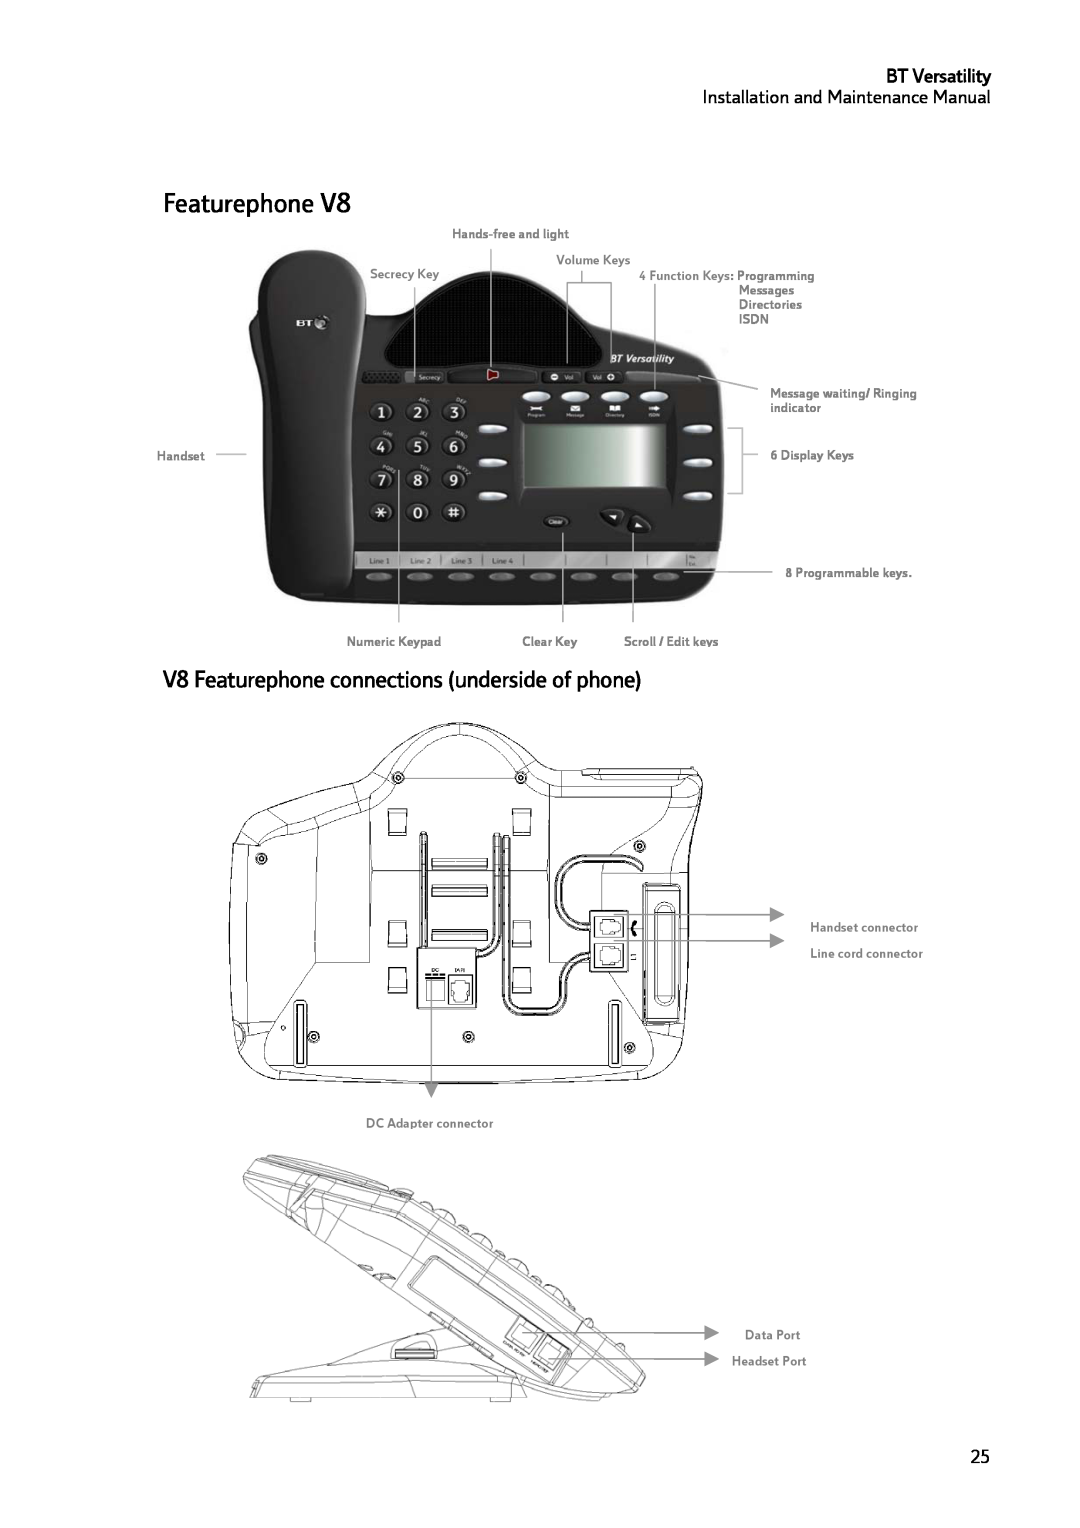 BT BT Versatility manual V8 Featurephone connections underside of phone 